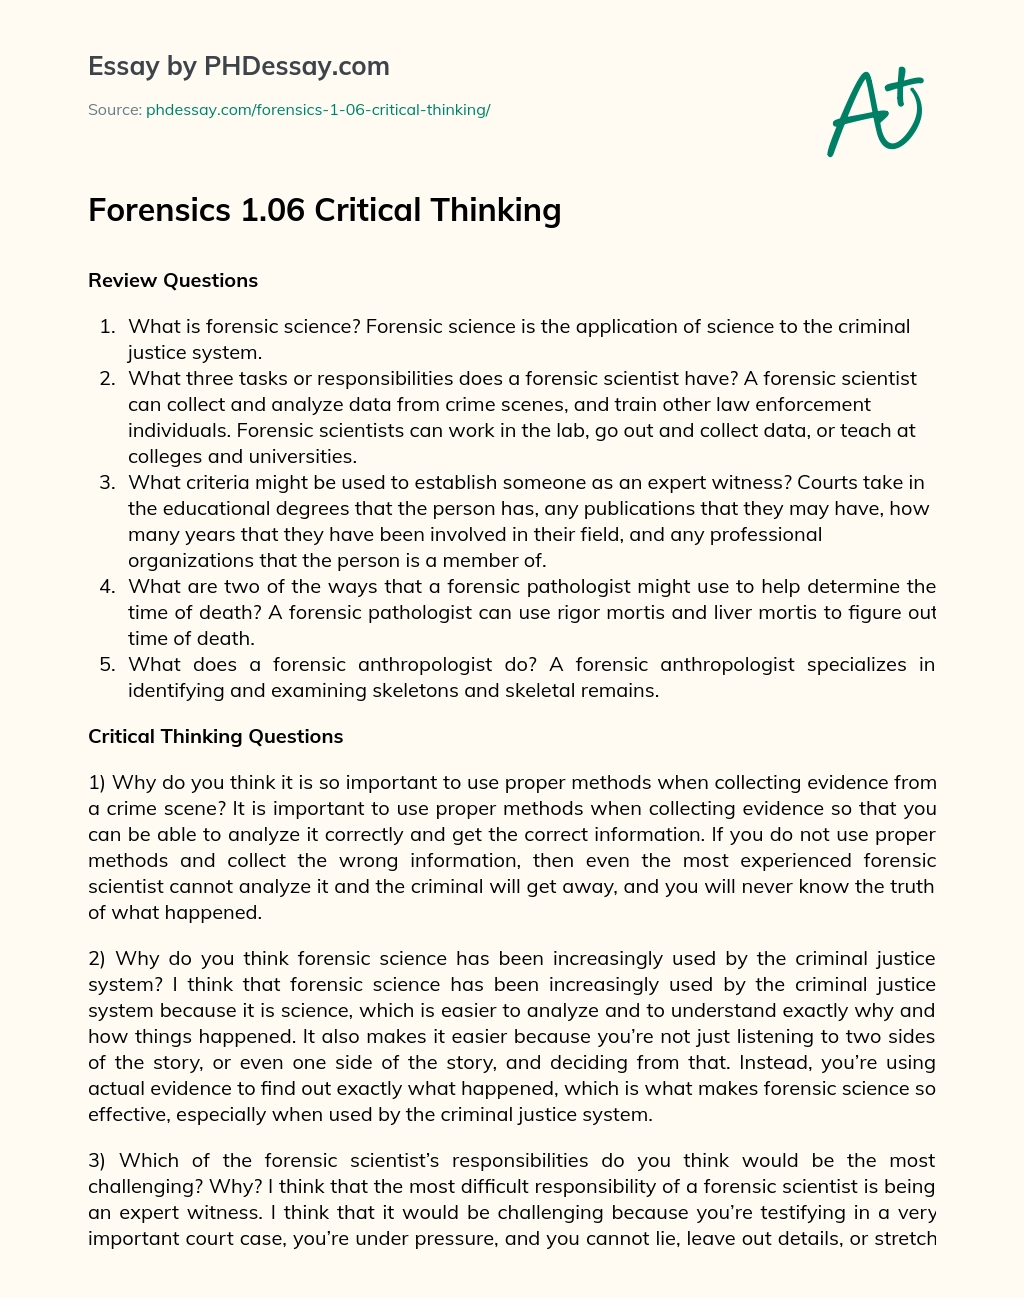 Forensics 1.06 Critical Thinking essay